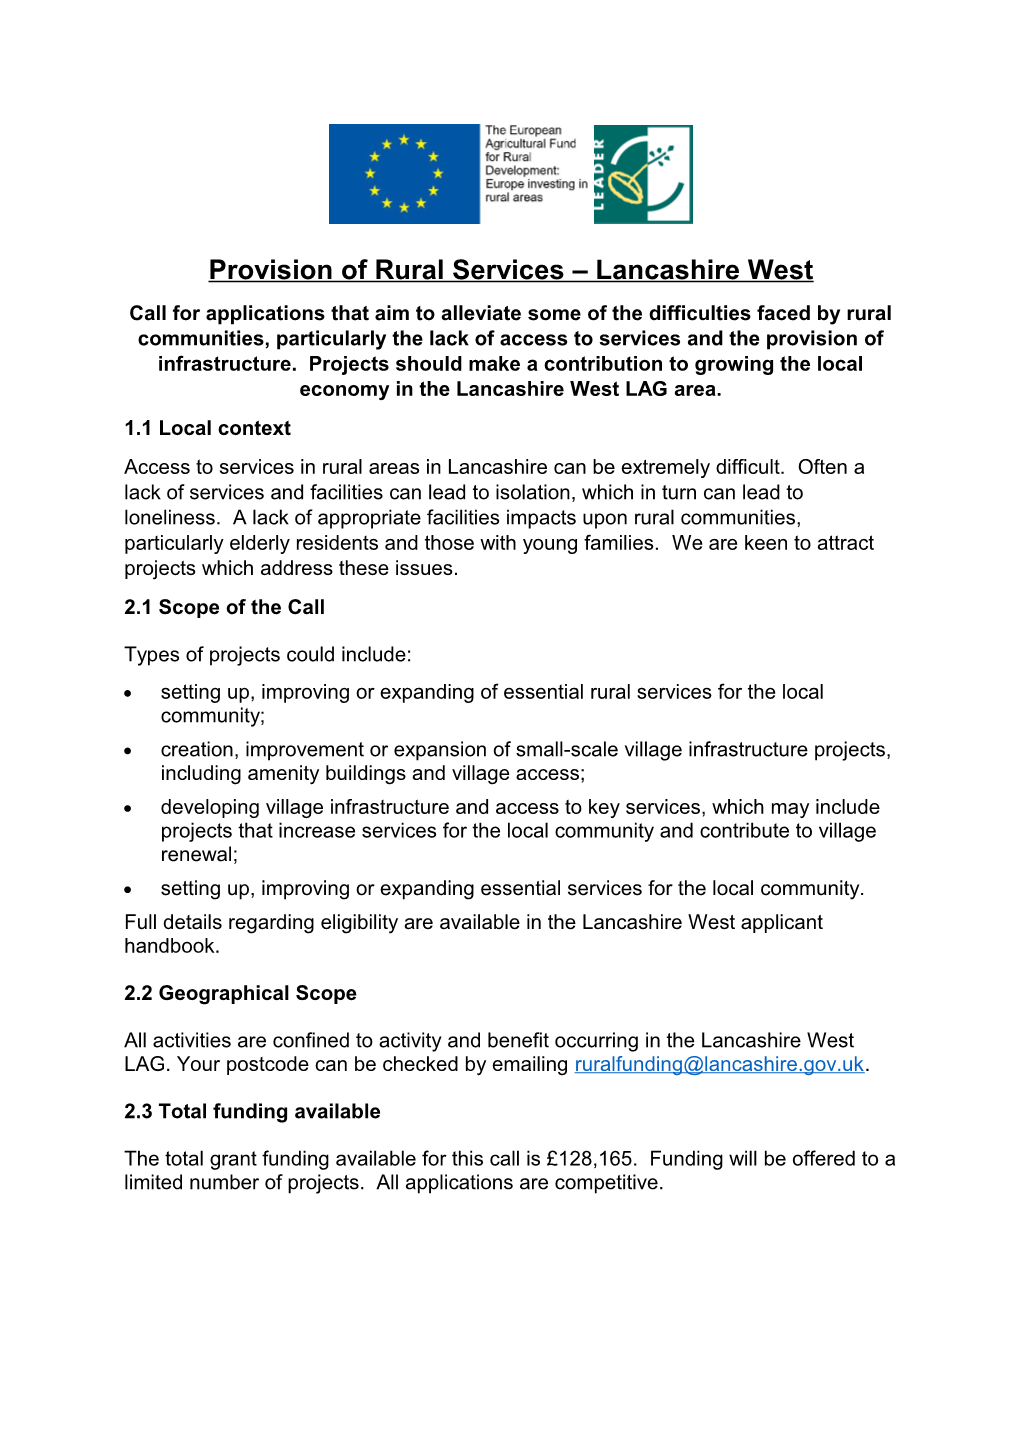 Provision of Rural Services Lancashire West